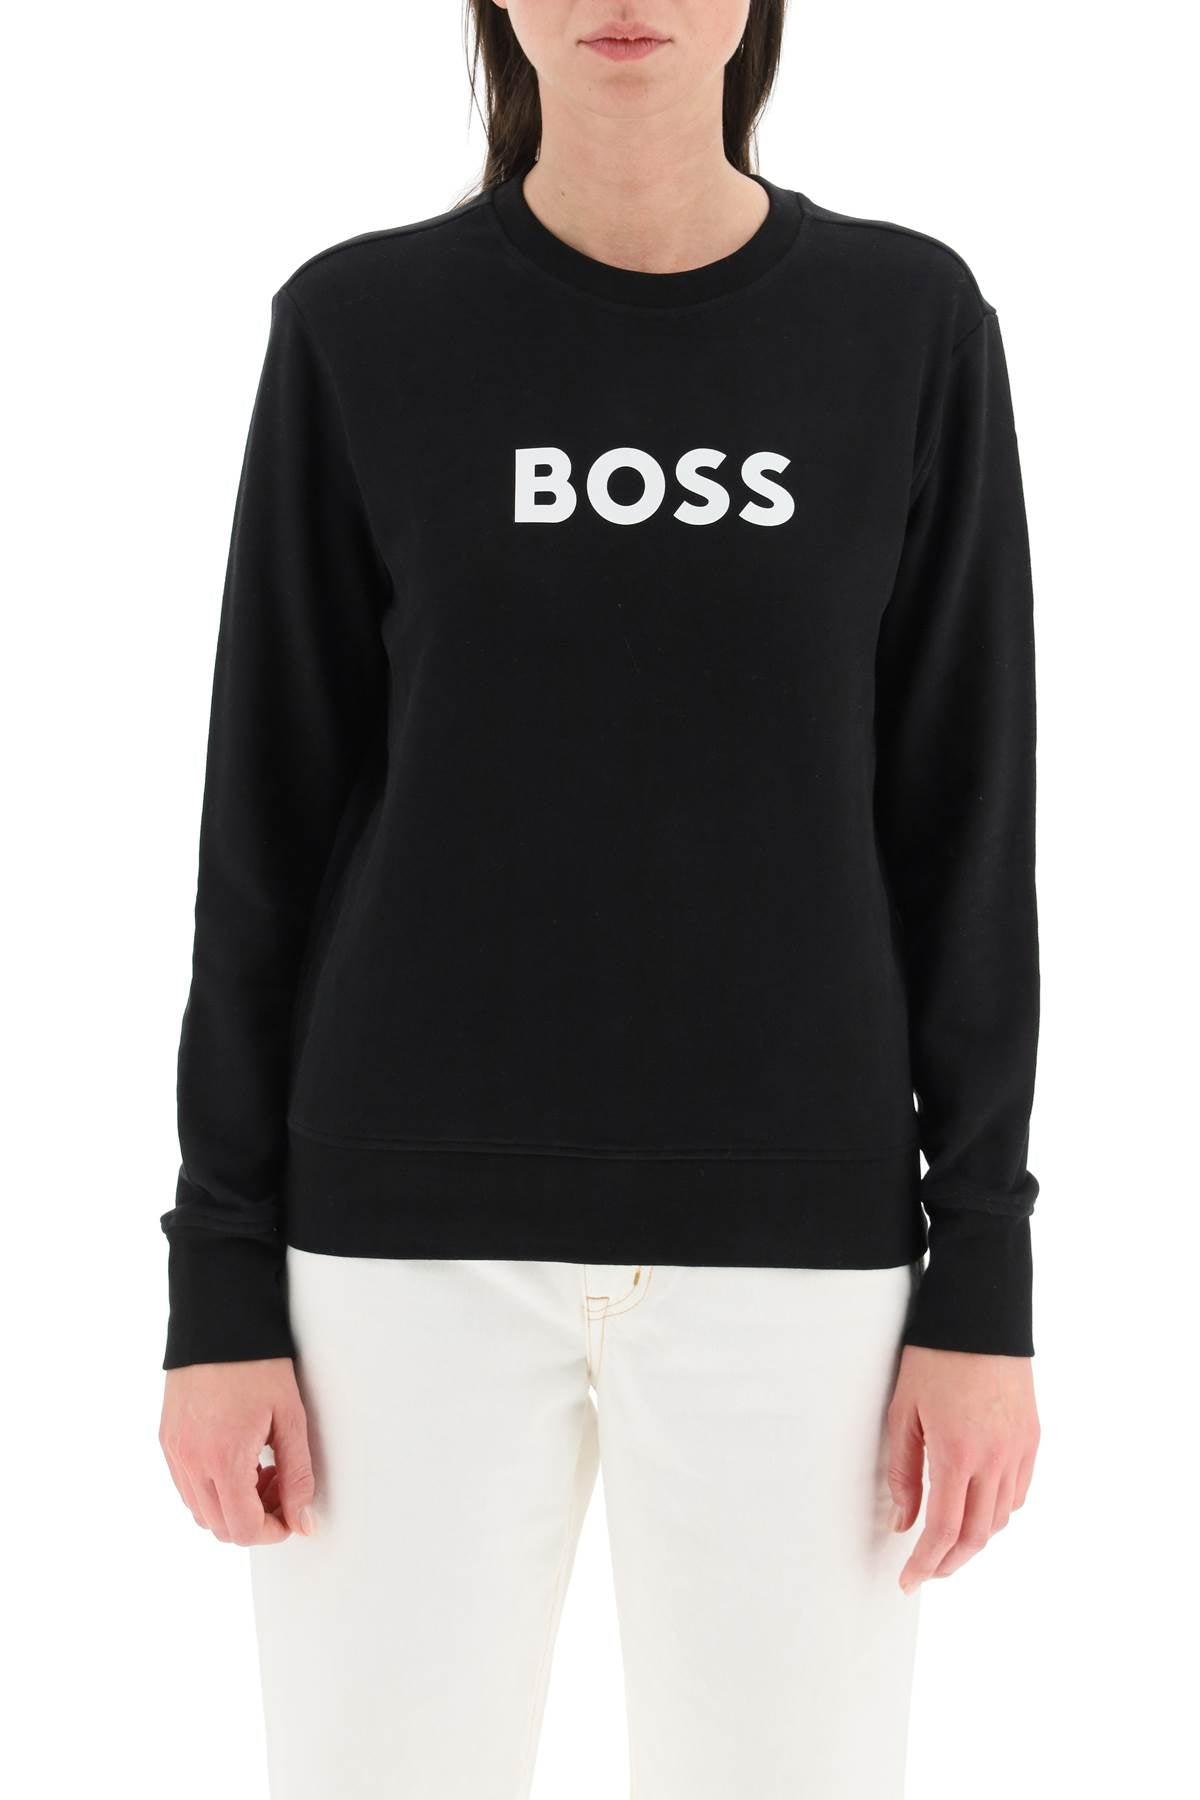 BOSS by HUGO BOSS Logo Print Crew-neck Sweatshirt in Black | Lyst